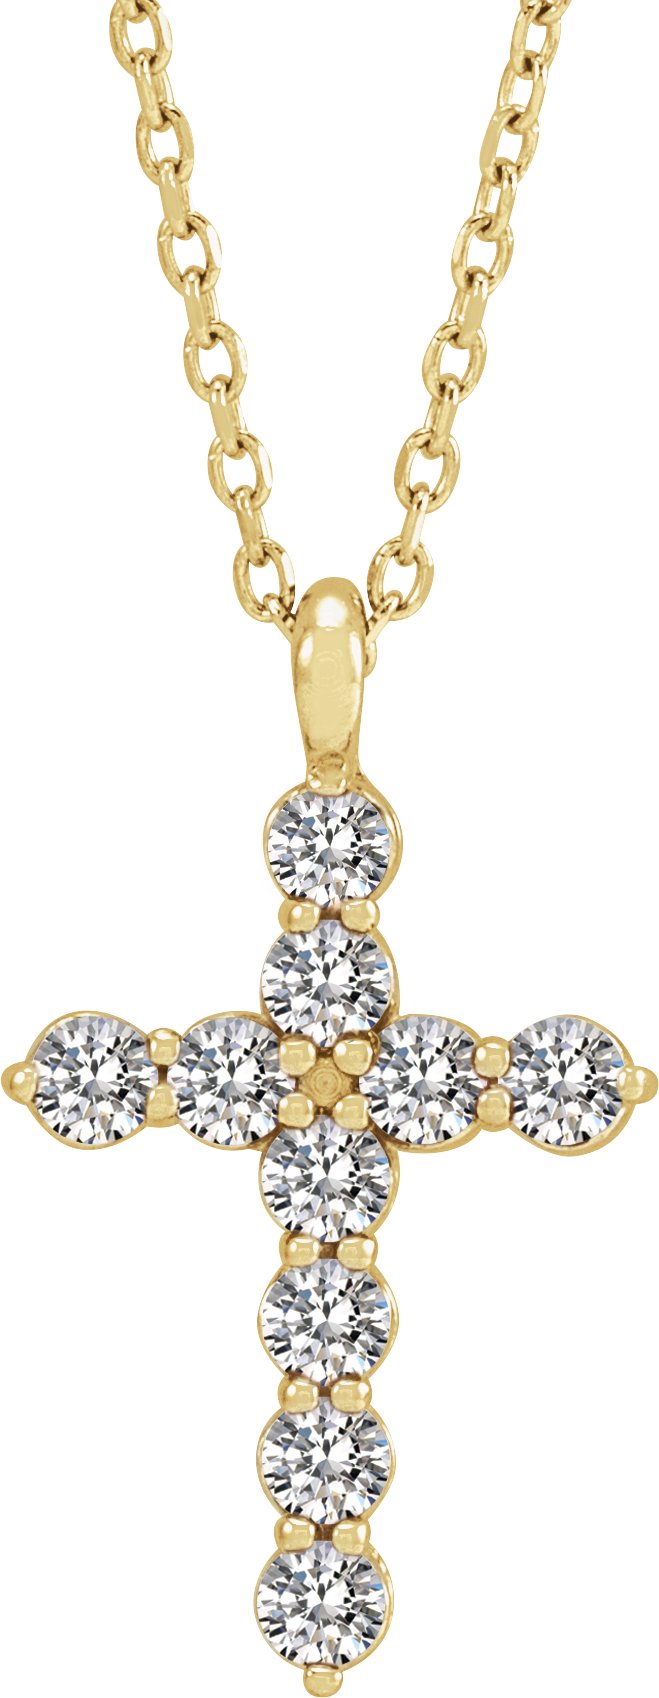 14K Yellow 1/3 CTW Natural Diamond Cross 16-18" Necklace